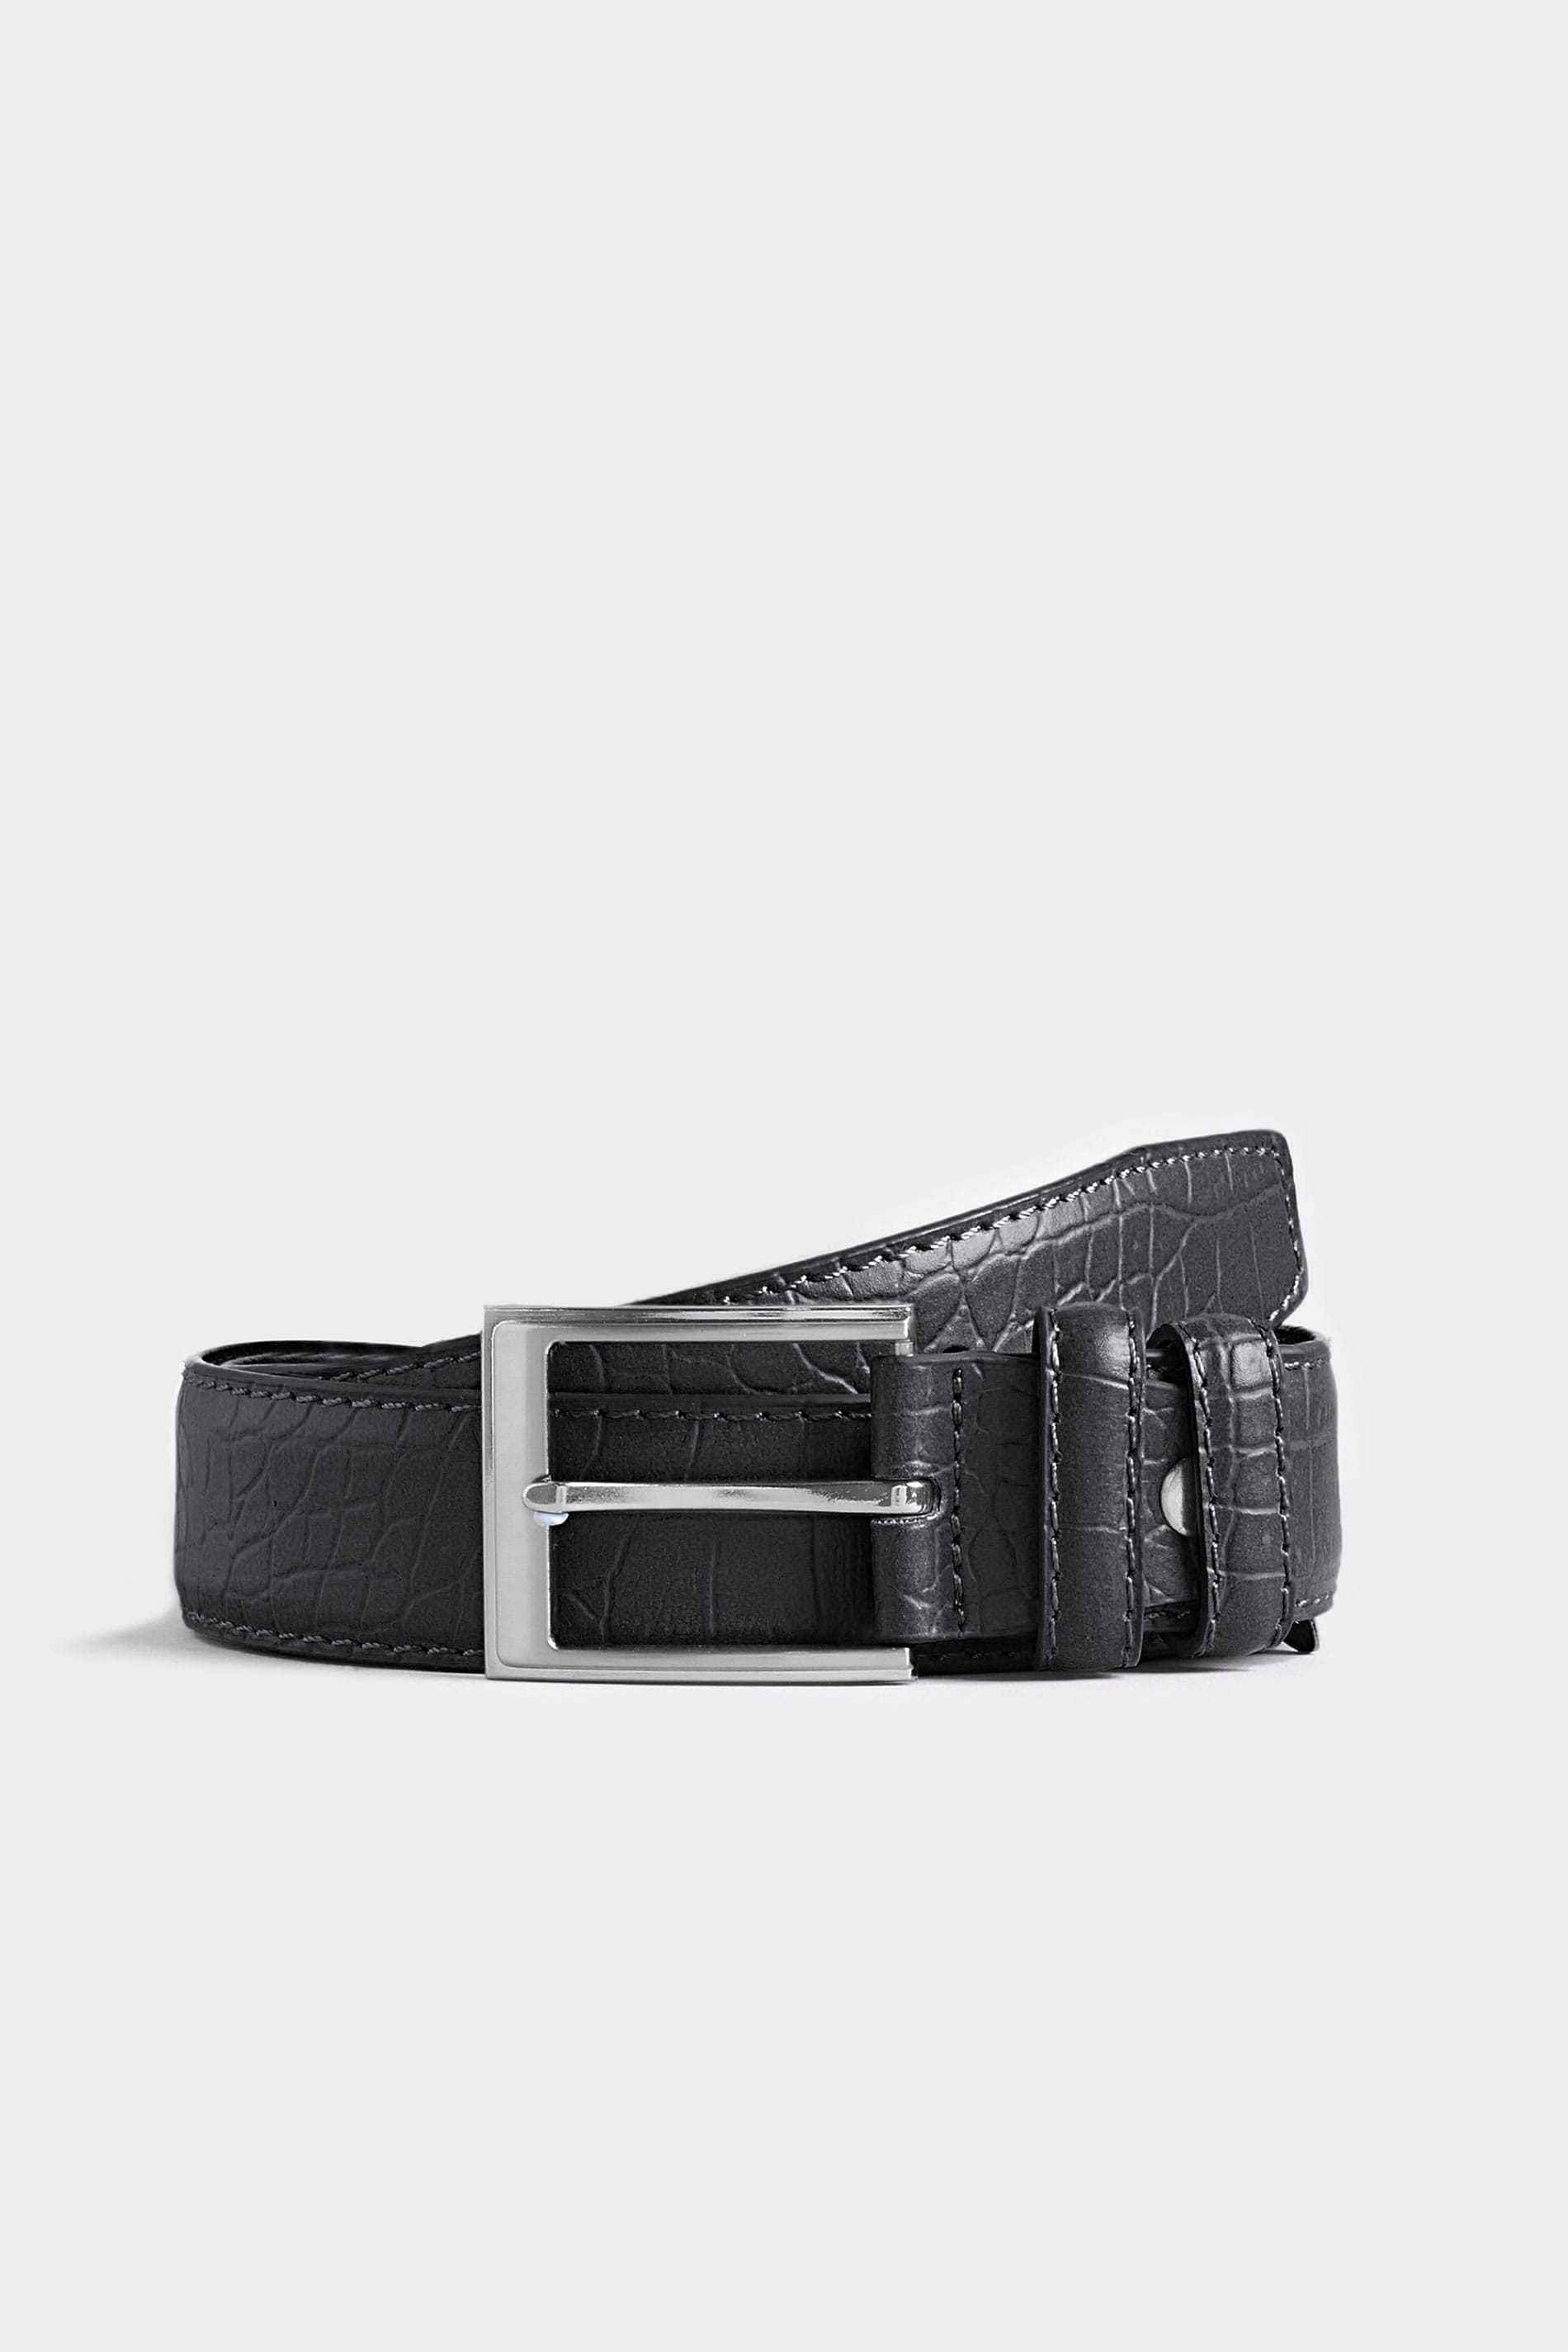 BadRhino Black Textured Bonded Leather Belt_aea2.jpg